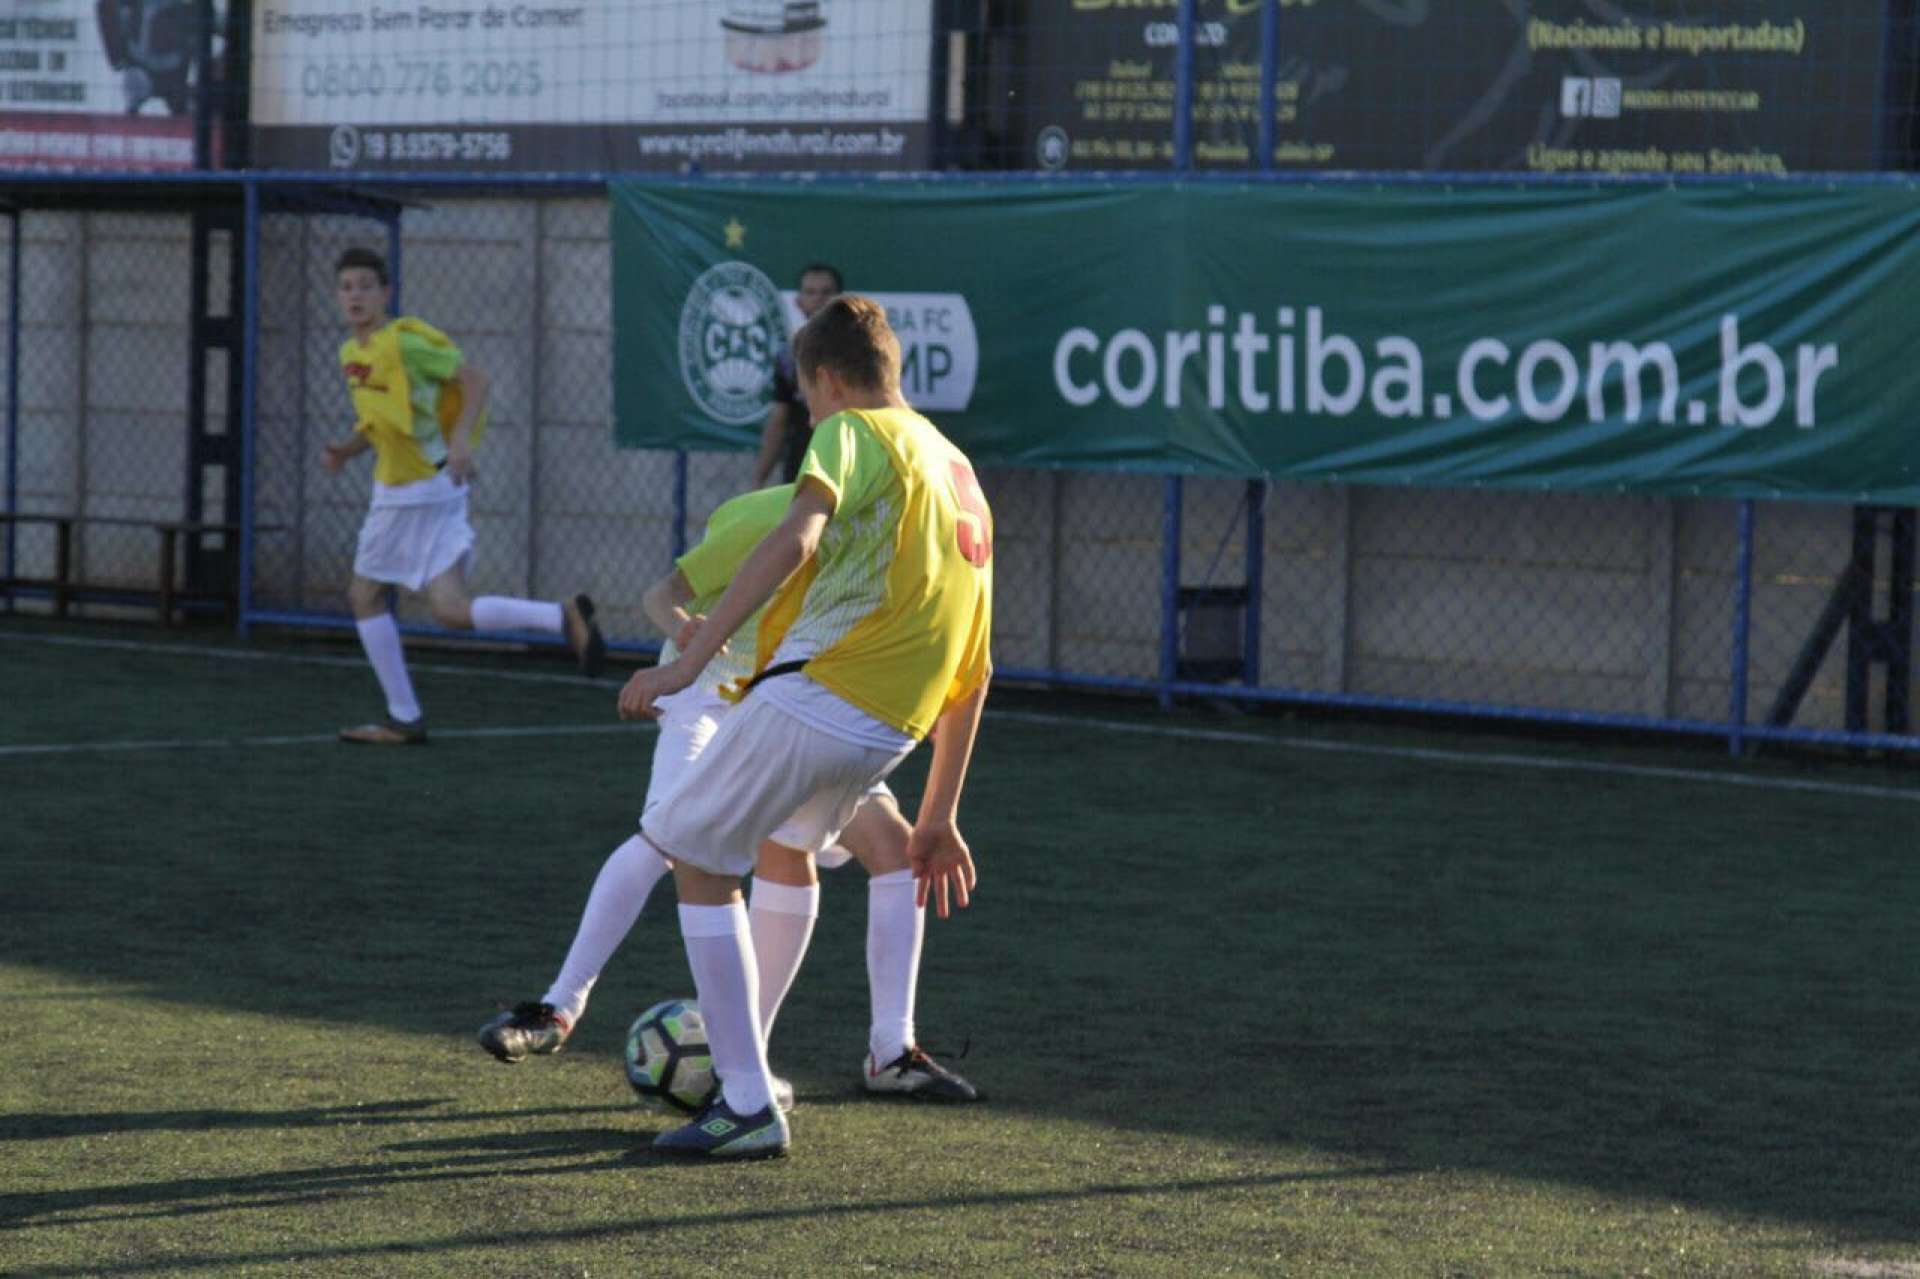 Coritiba FC Camp traz resultados